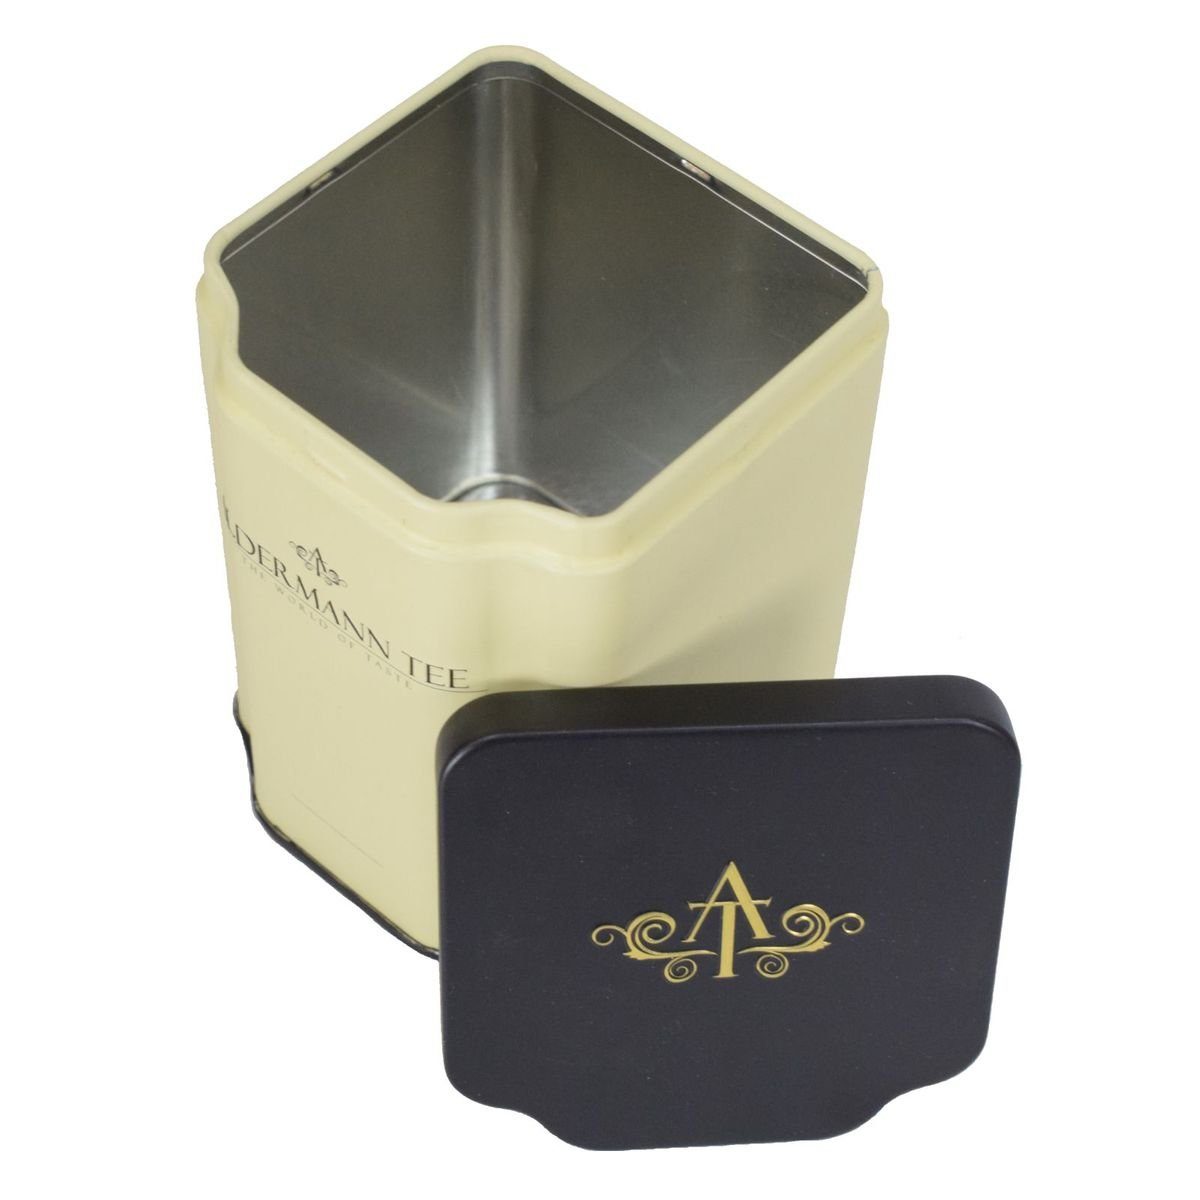 schwarzer Tee" "Aldermann 8x8x11 Teebox Metall Teedose, Deckel, Gewürze, cm